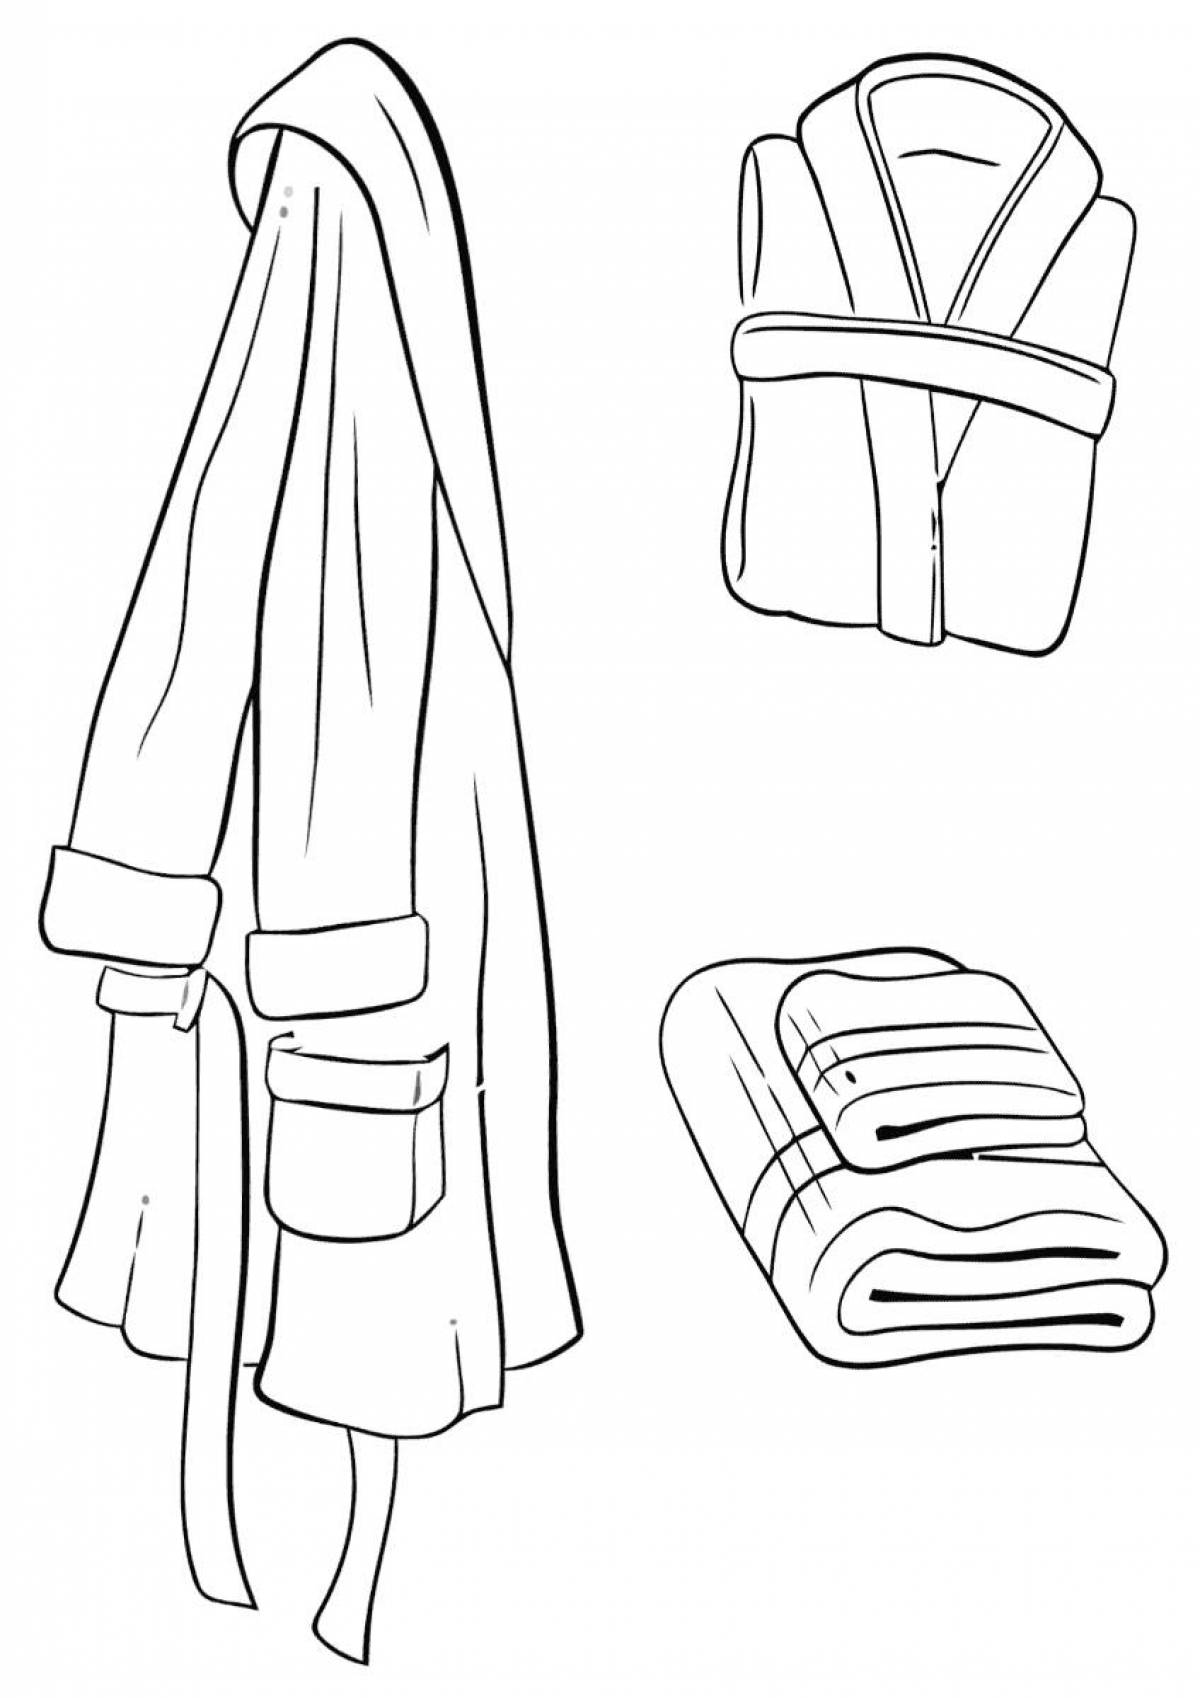 Bathrobe and towel